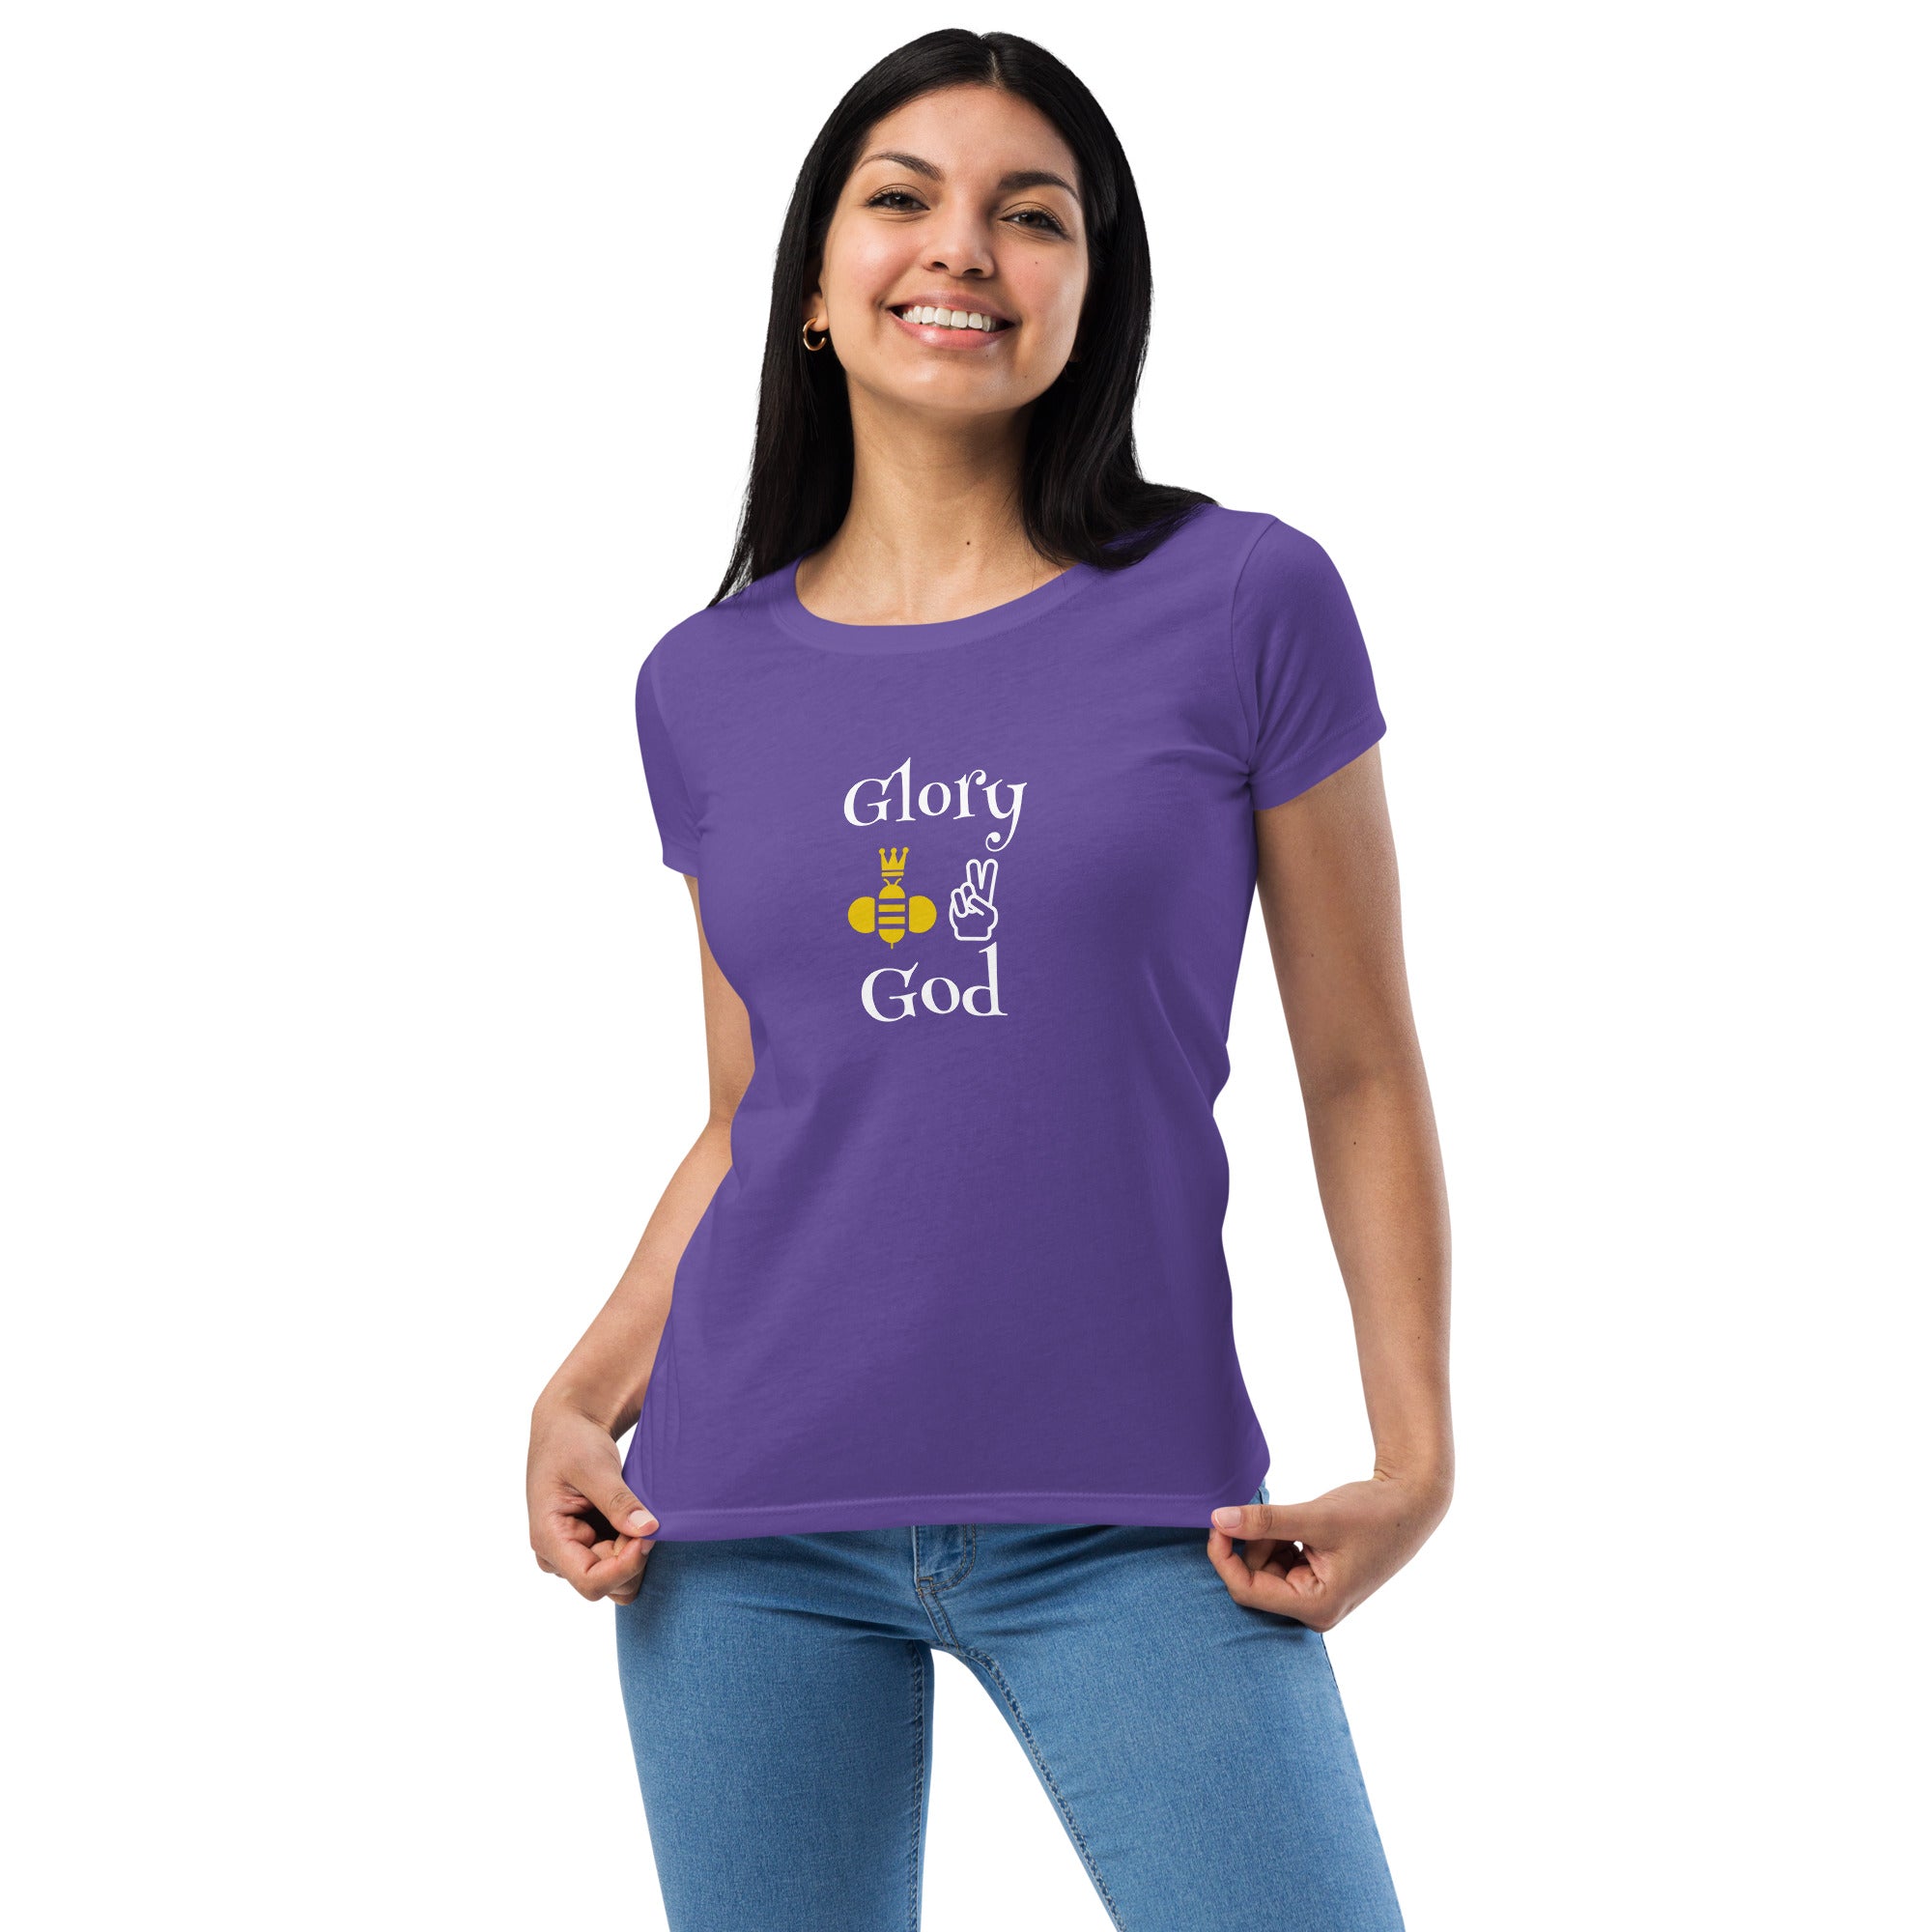 Glory B 2 God Women’s fitted t-shirt